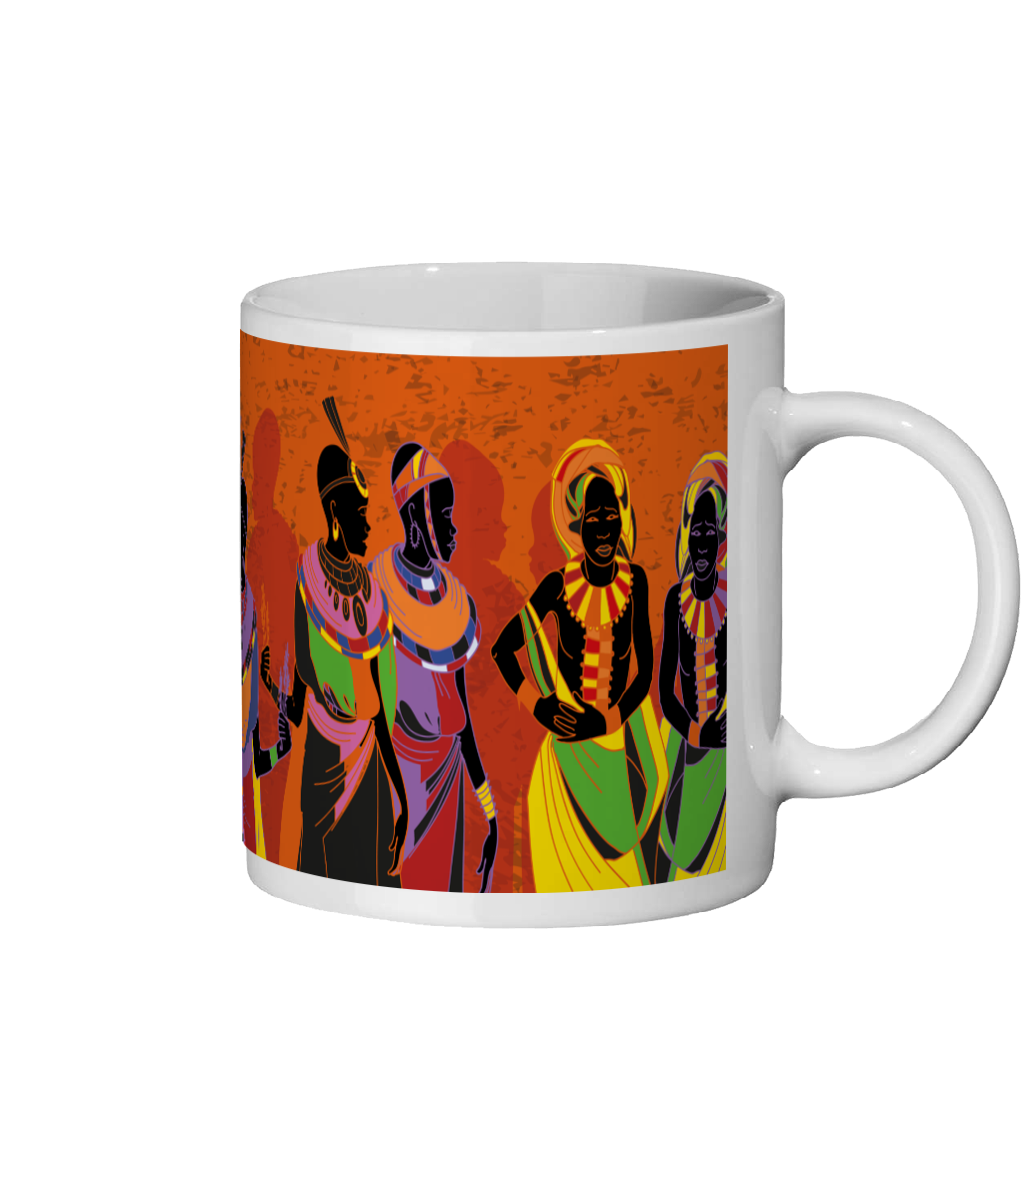 EXCLUSIVE African Village People Ceramic Mug - FAST UK DELIVERY